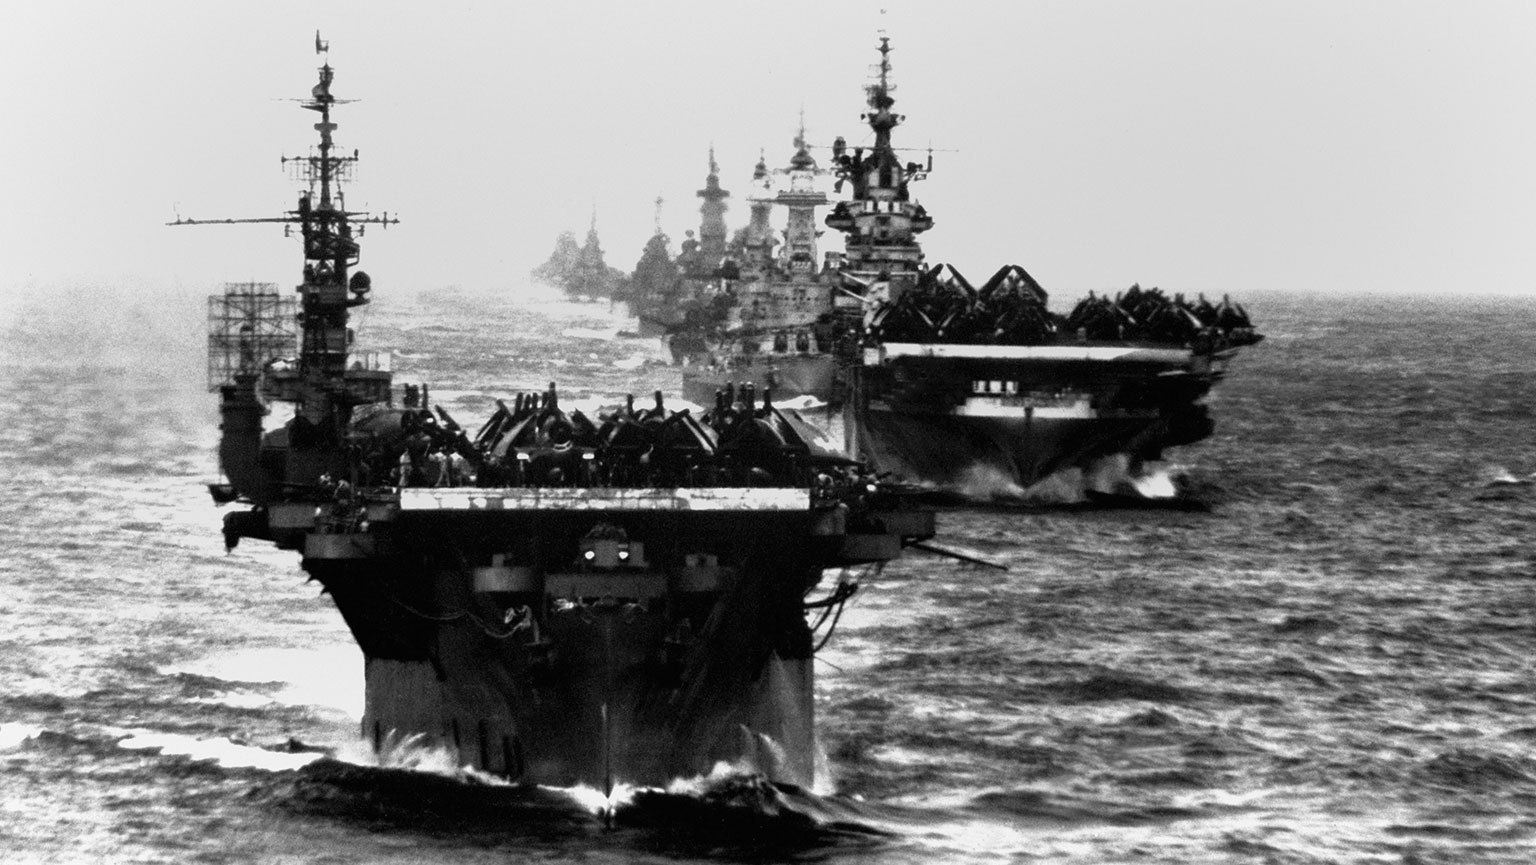 us navy pacific war documentaries